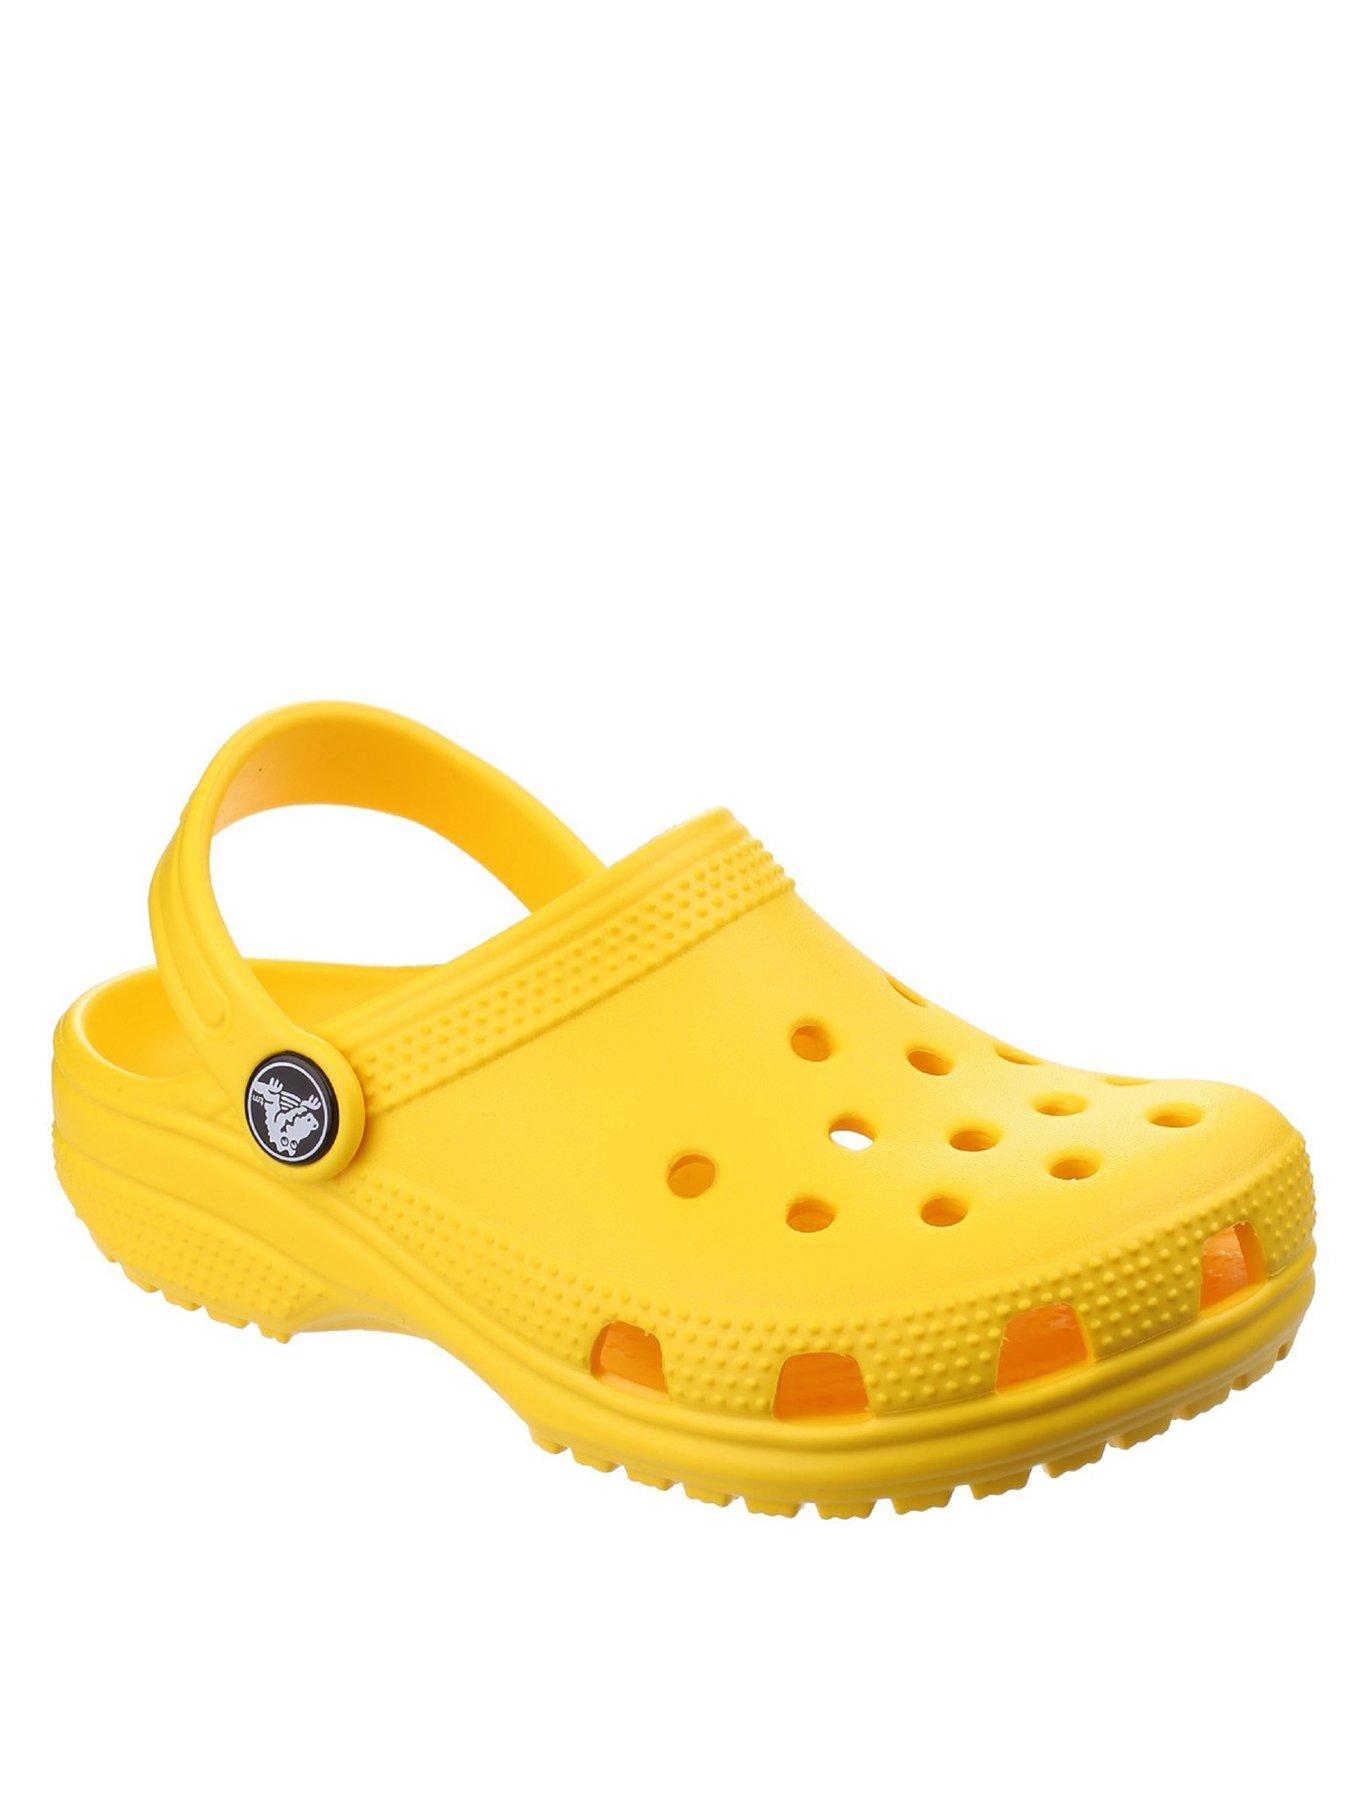 childrens crocs uk